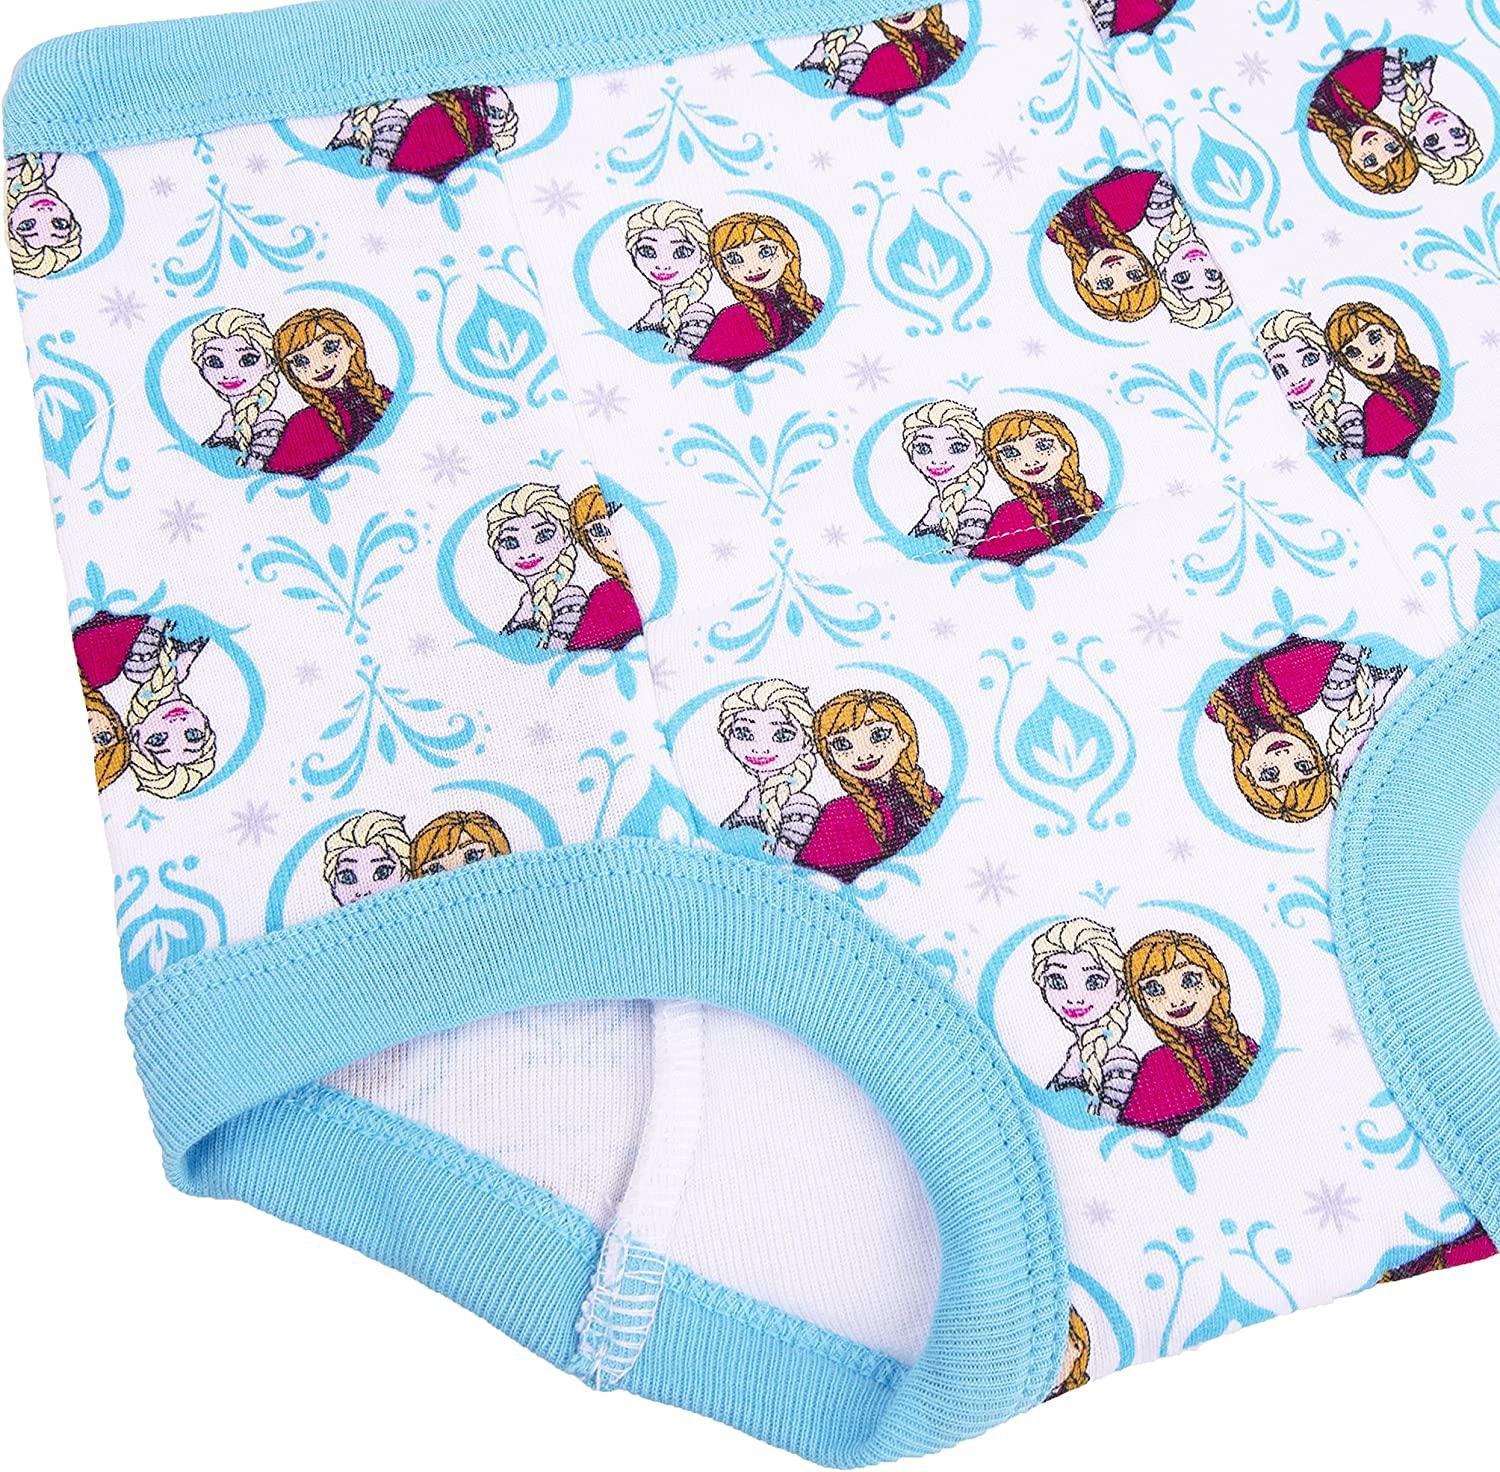 Disney Princess Toddler Girls Panties, 6 Pack Sizes India